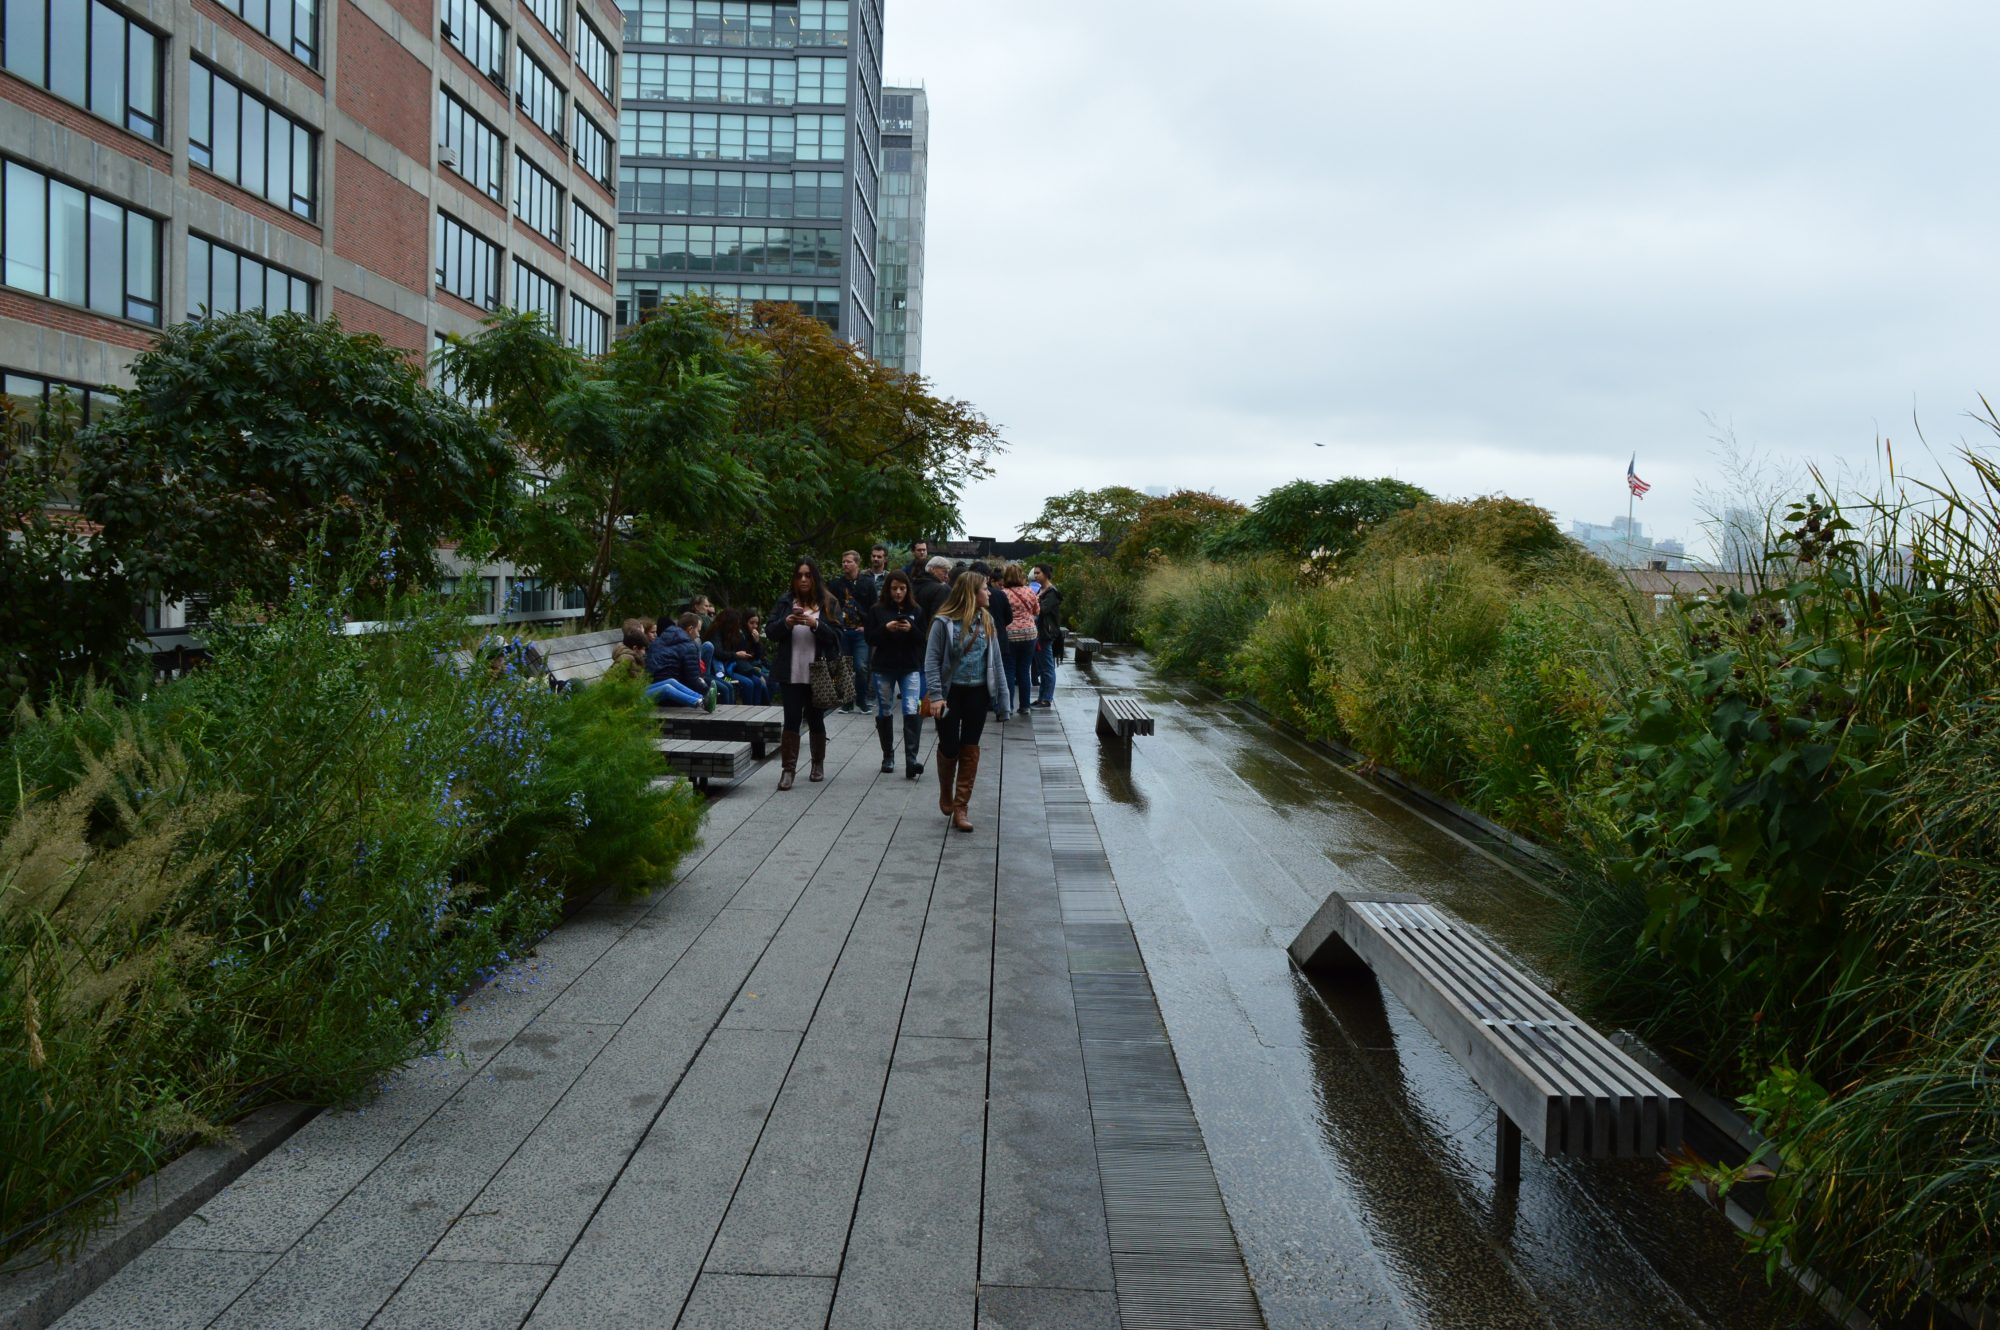 The High Line New York City